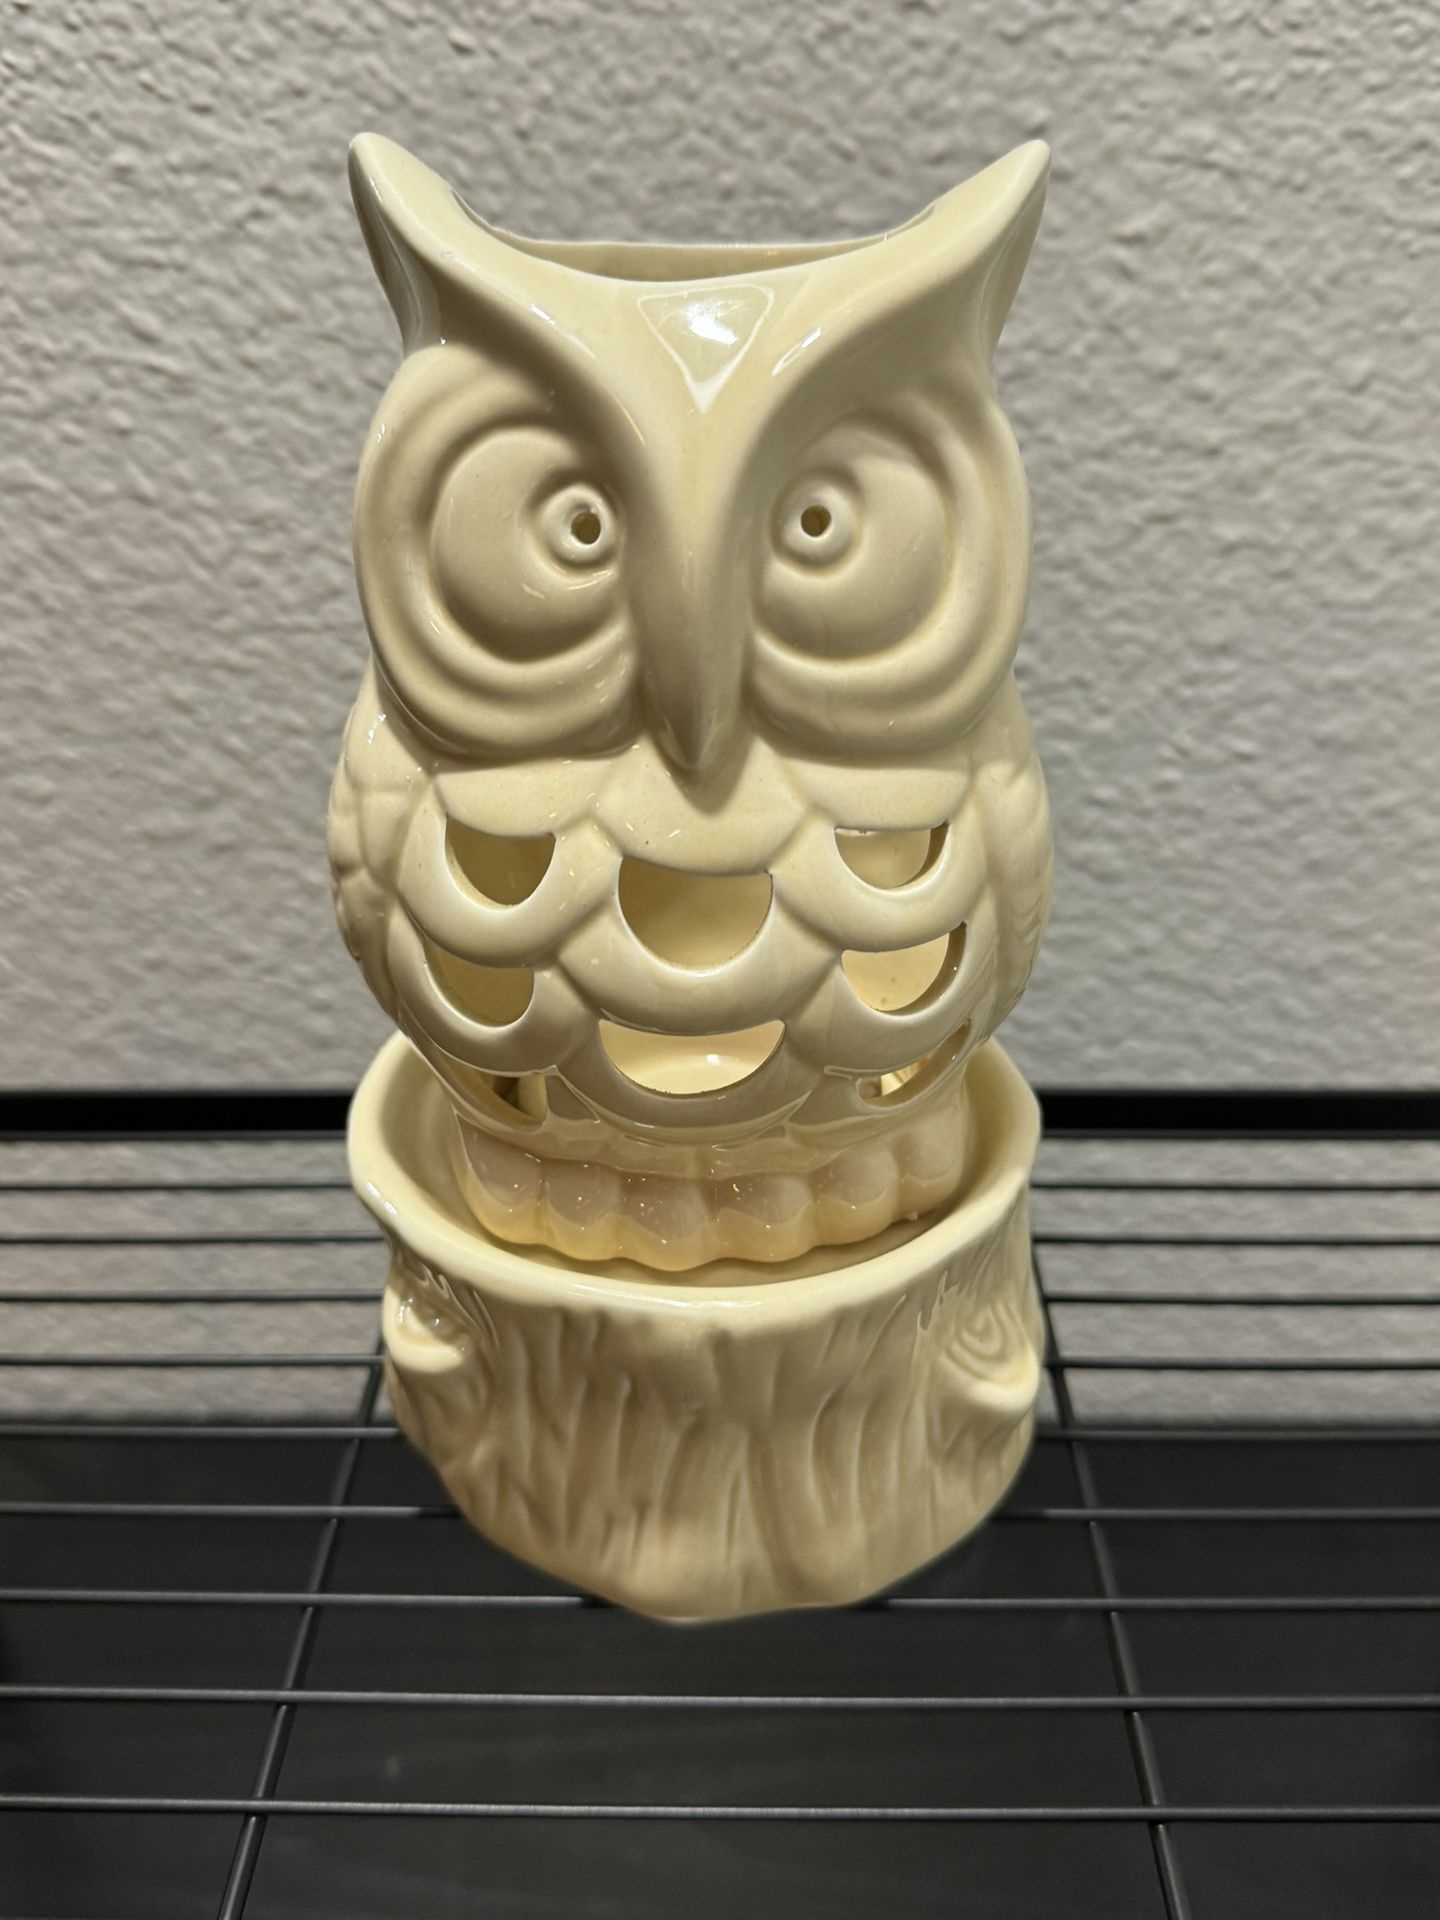 4 Owl Ceramic Tea Candle Light Holder